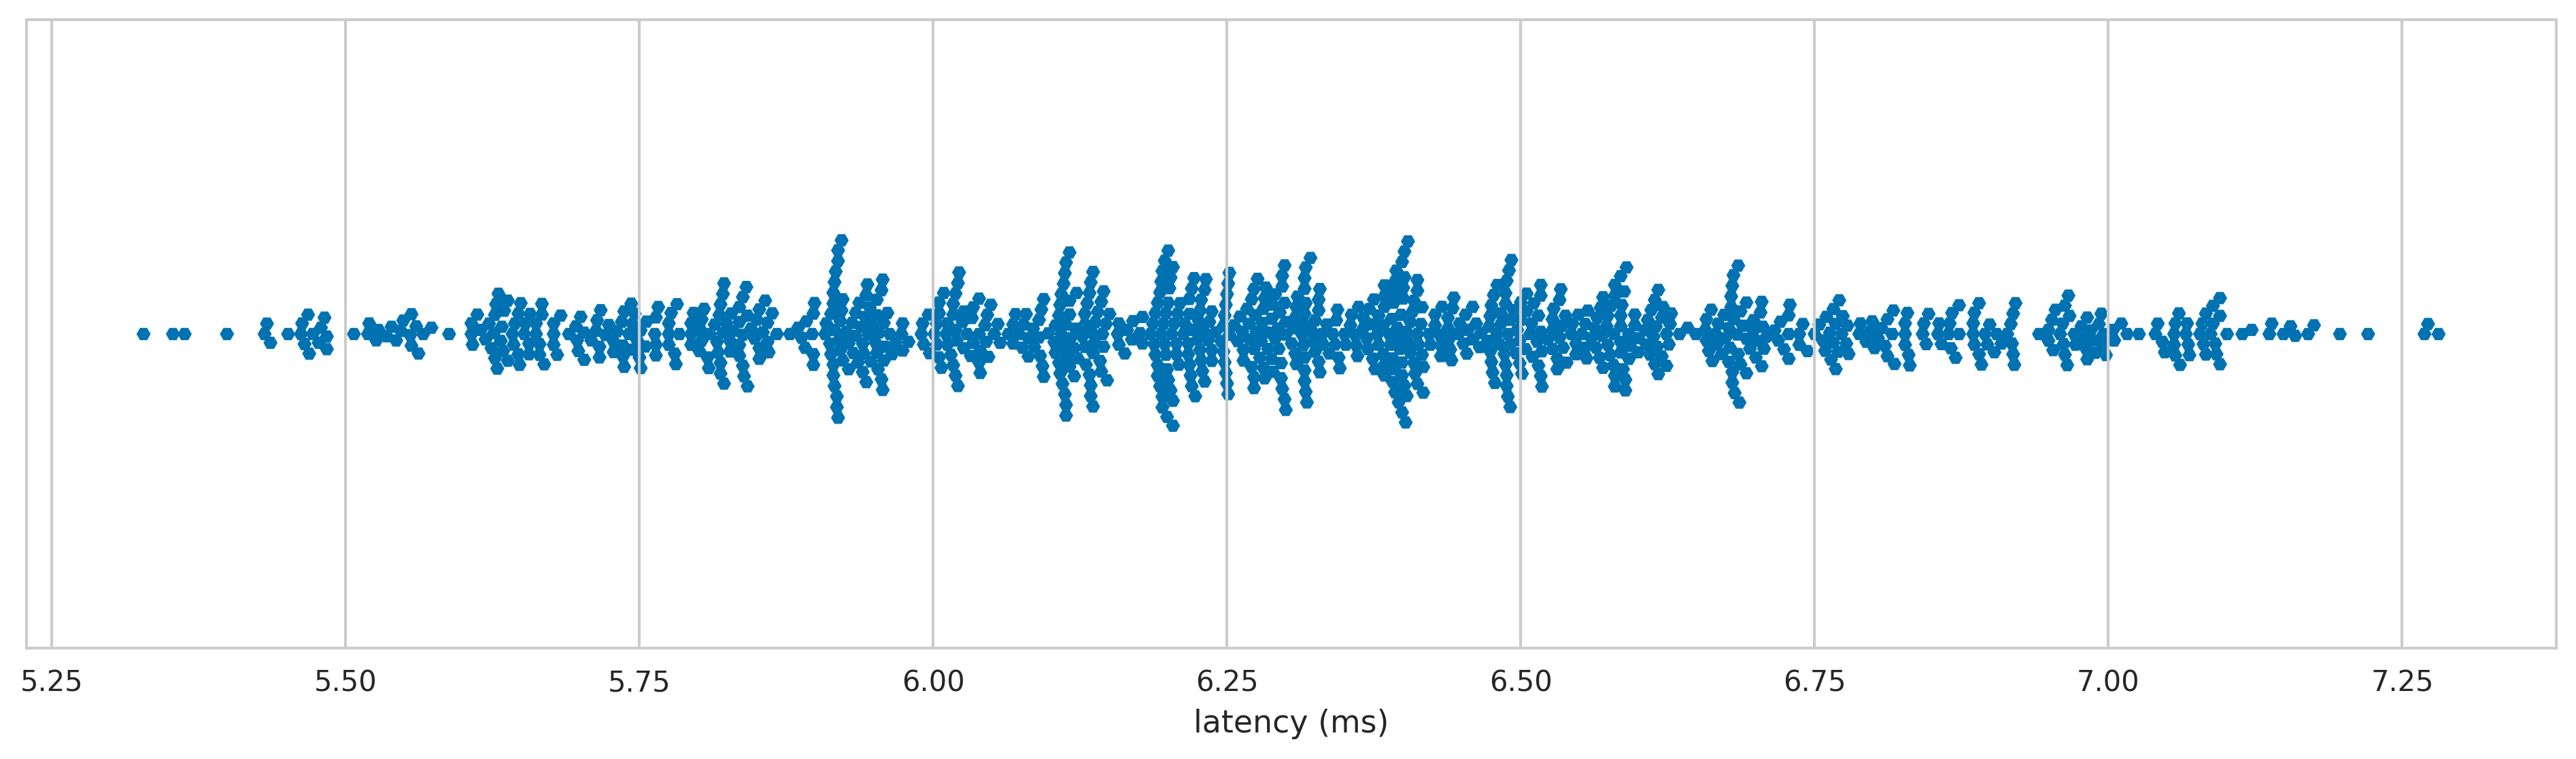 Microsoft Intellimouse latency distribution 